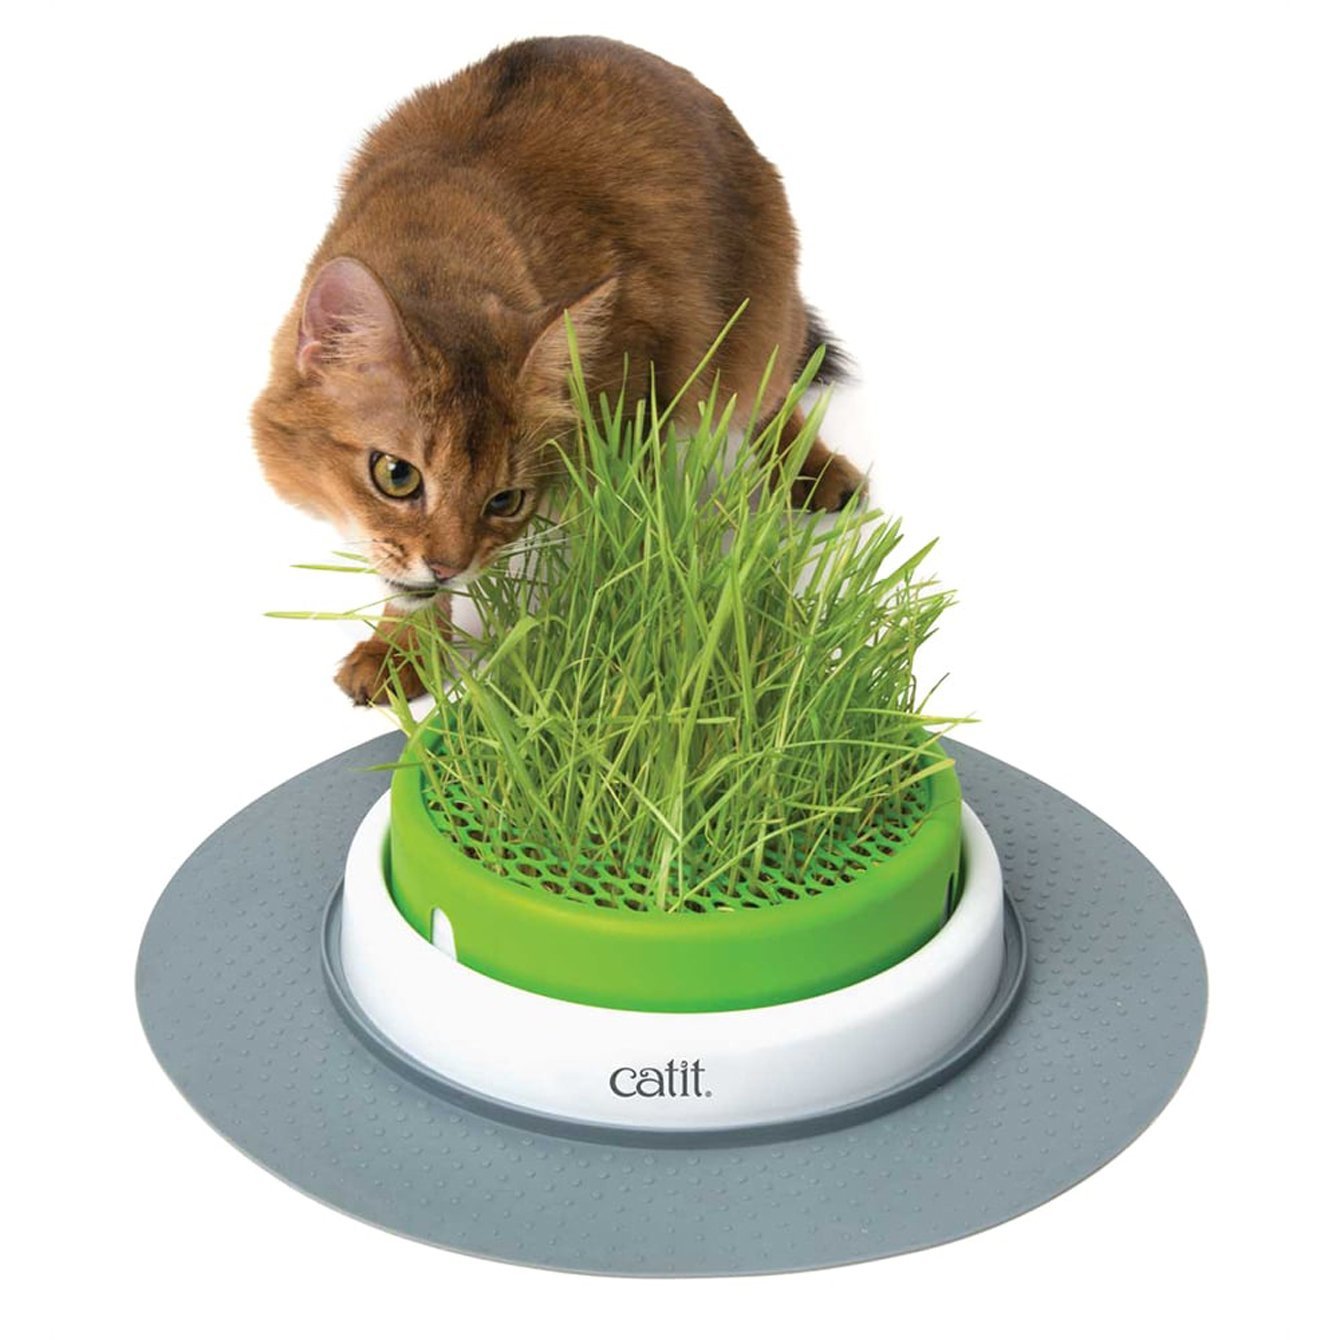 Cat eating grass from the Catit Senses 2.0 Grass Planter